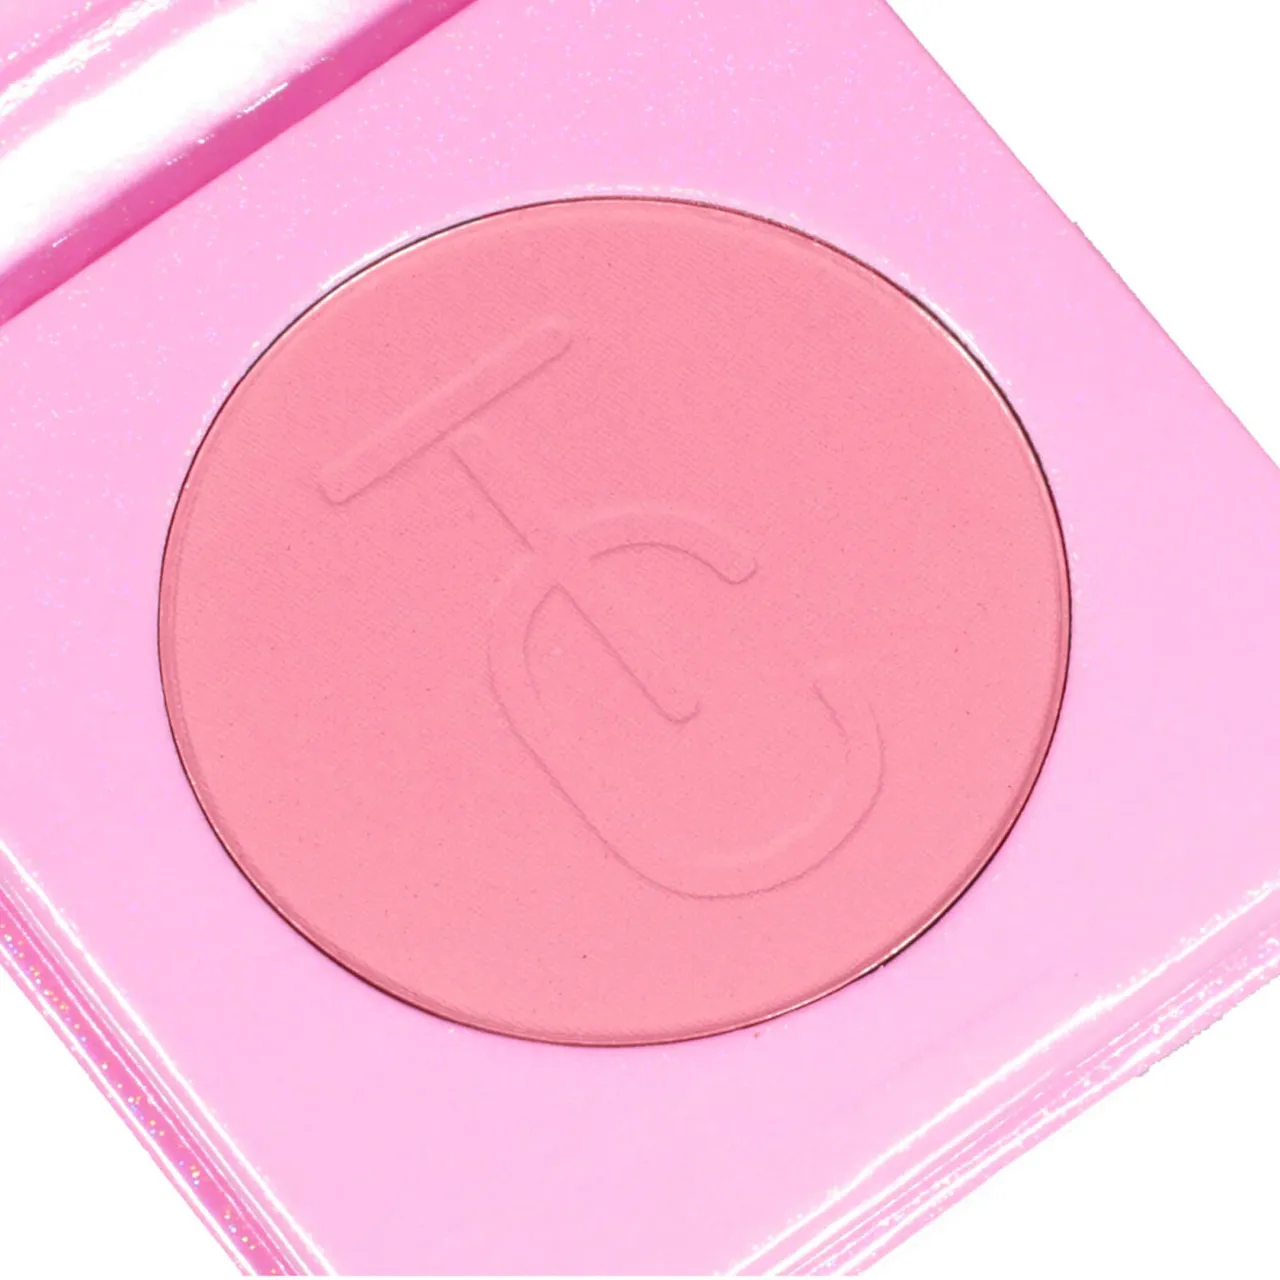 Trigwell Cosmetics Cheek & Eye Blush 4.3g (Various Shades) - Bellini Baby